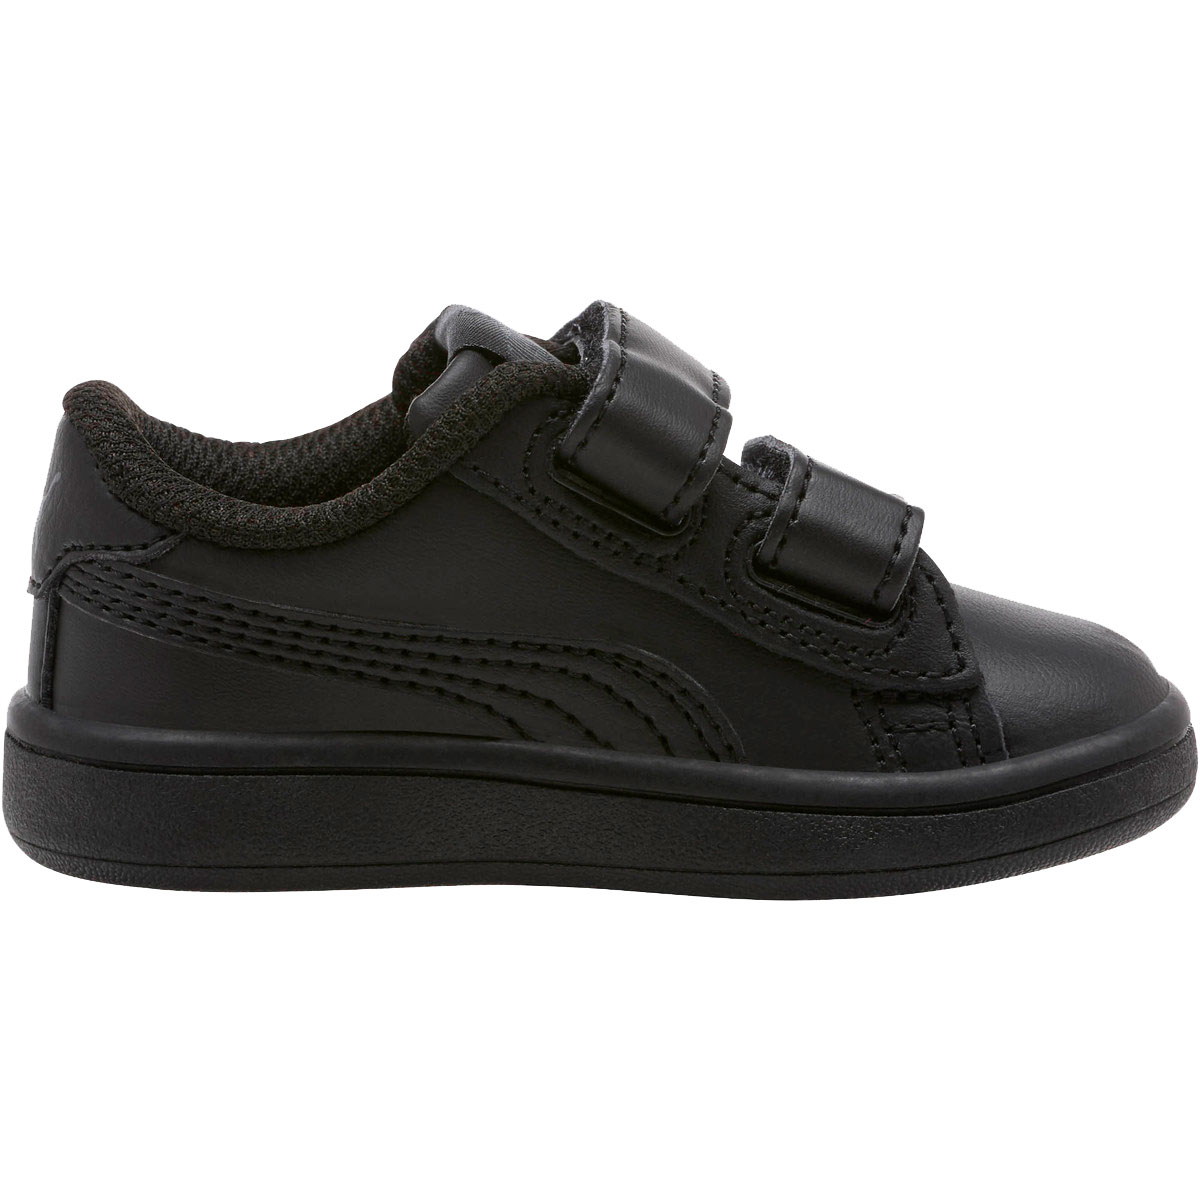 Puma Toddler Boys' Smash V2 Lv Sneakers - Black, 7